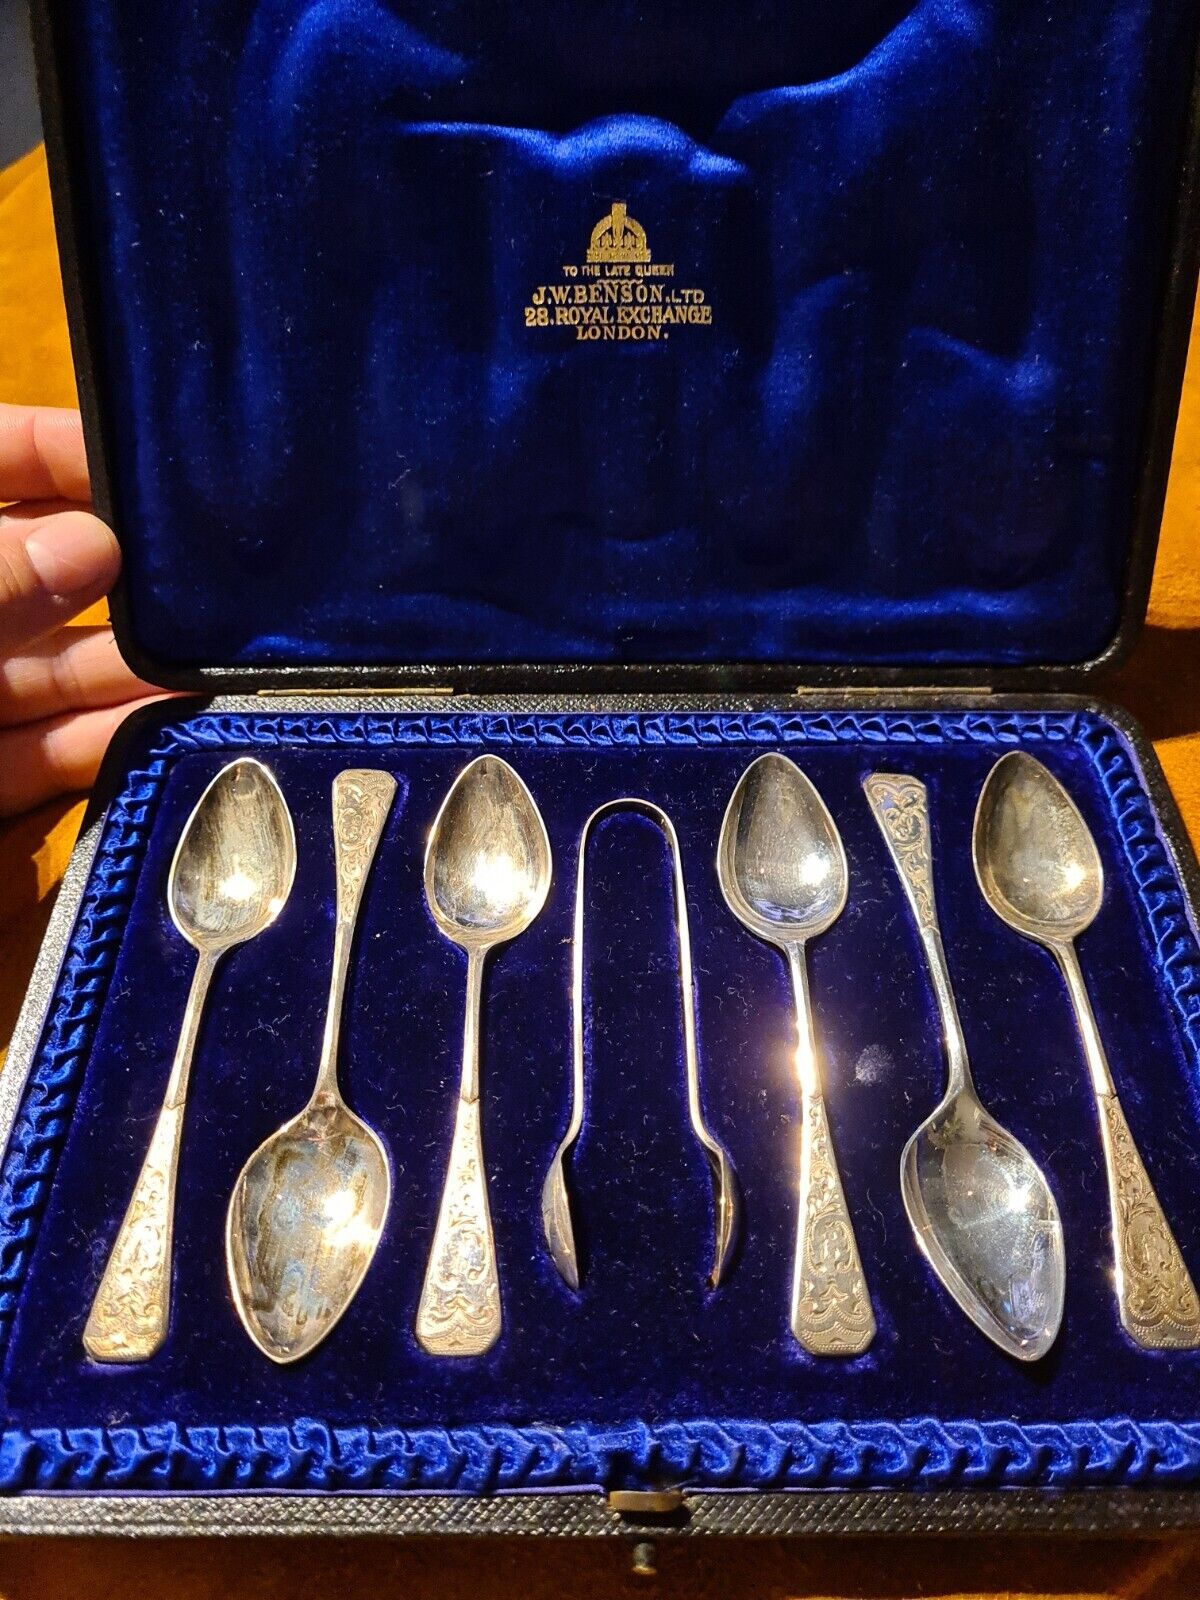 J.W.Benson LTD Hallmarked Silver Teaspoon Set of 6 Spoons and One Tongs Vintage